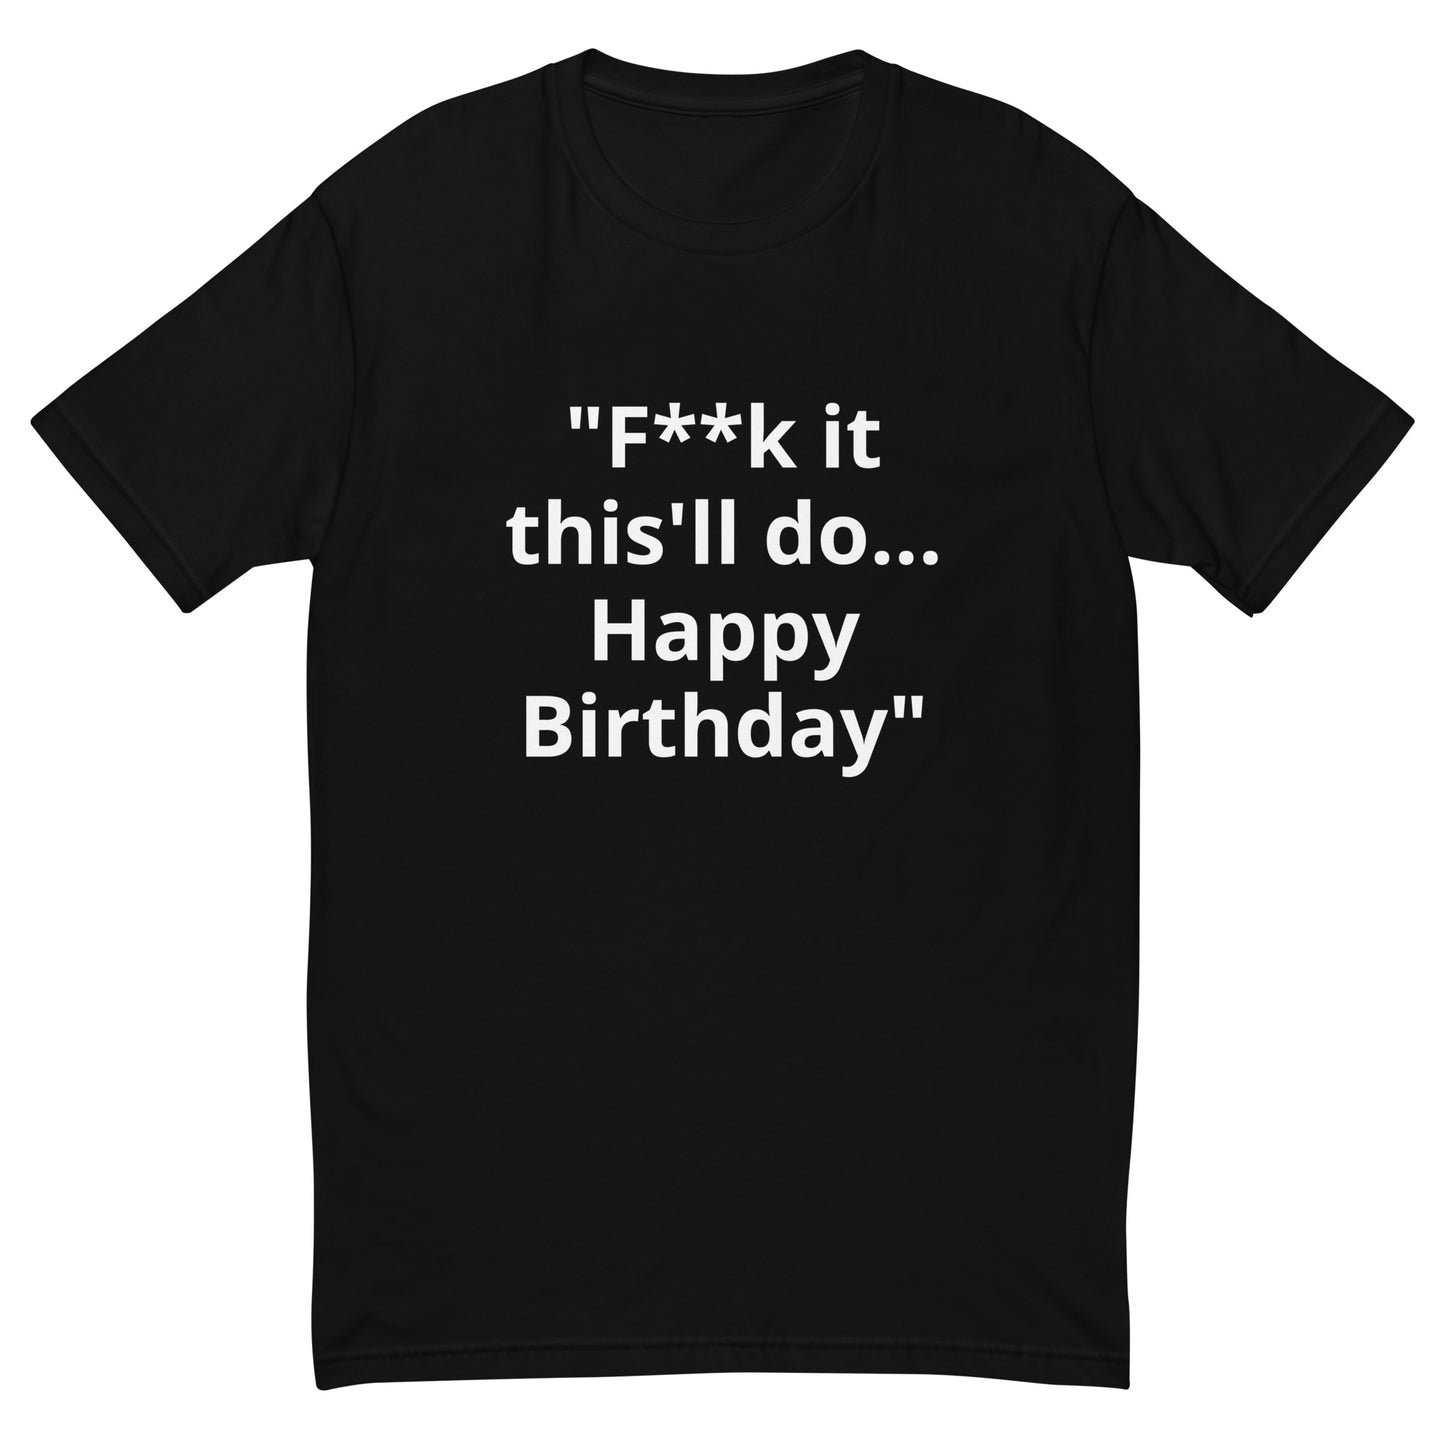 F**k it, happy birthday men's T-shirt